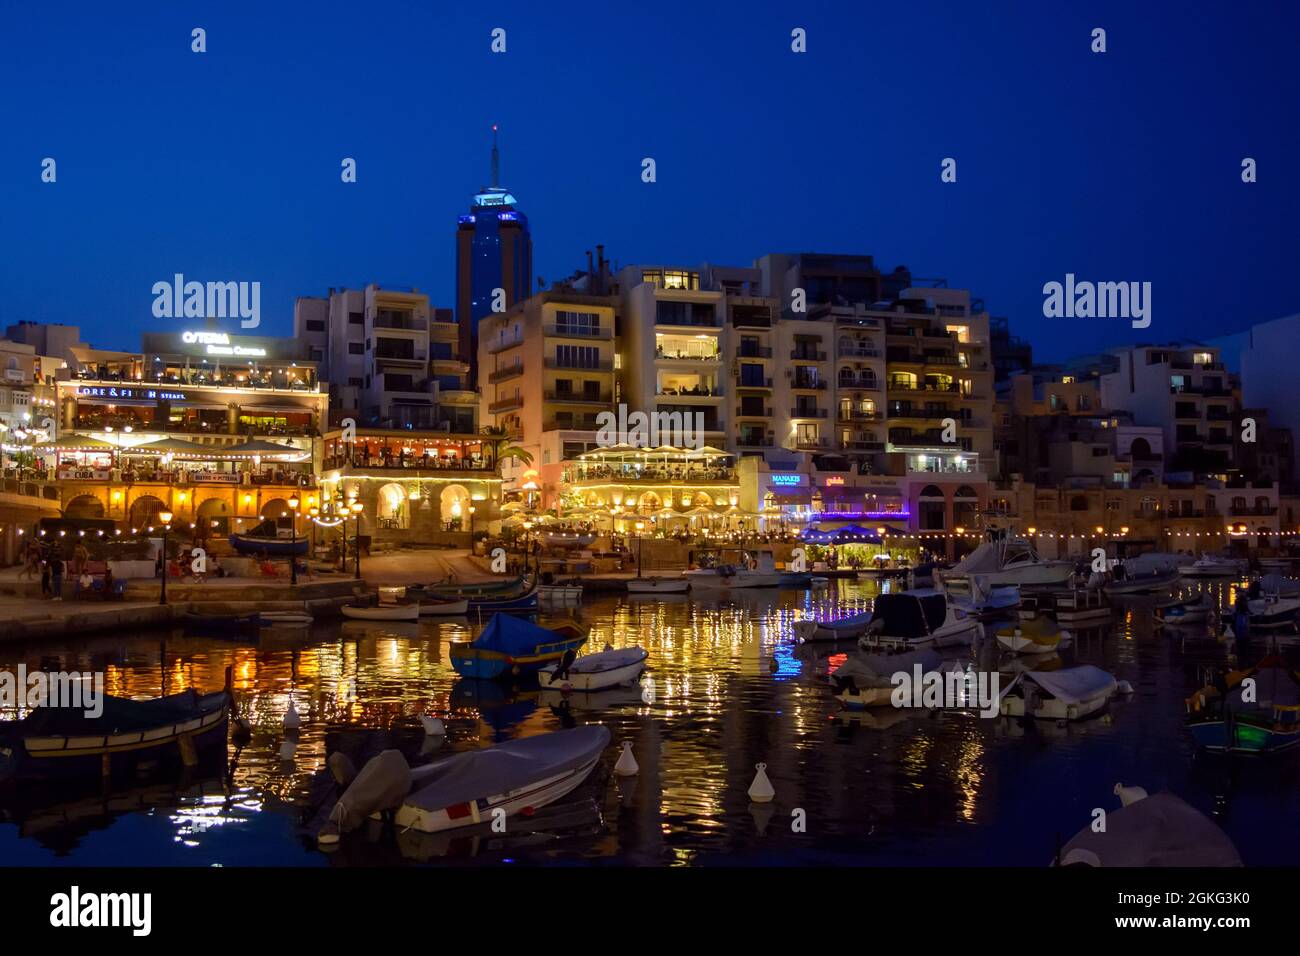 Illuminated St. Julian's coastline with Malta's tallest building - Portomaso Business Tower at night. Stock Photo